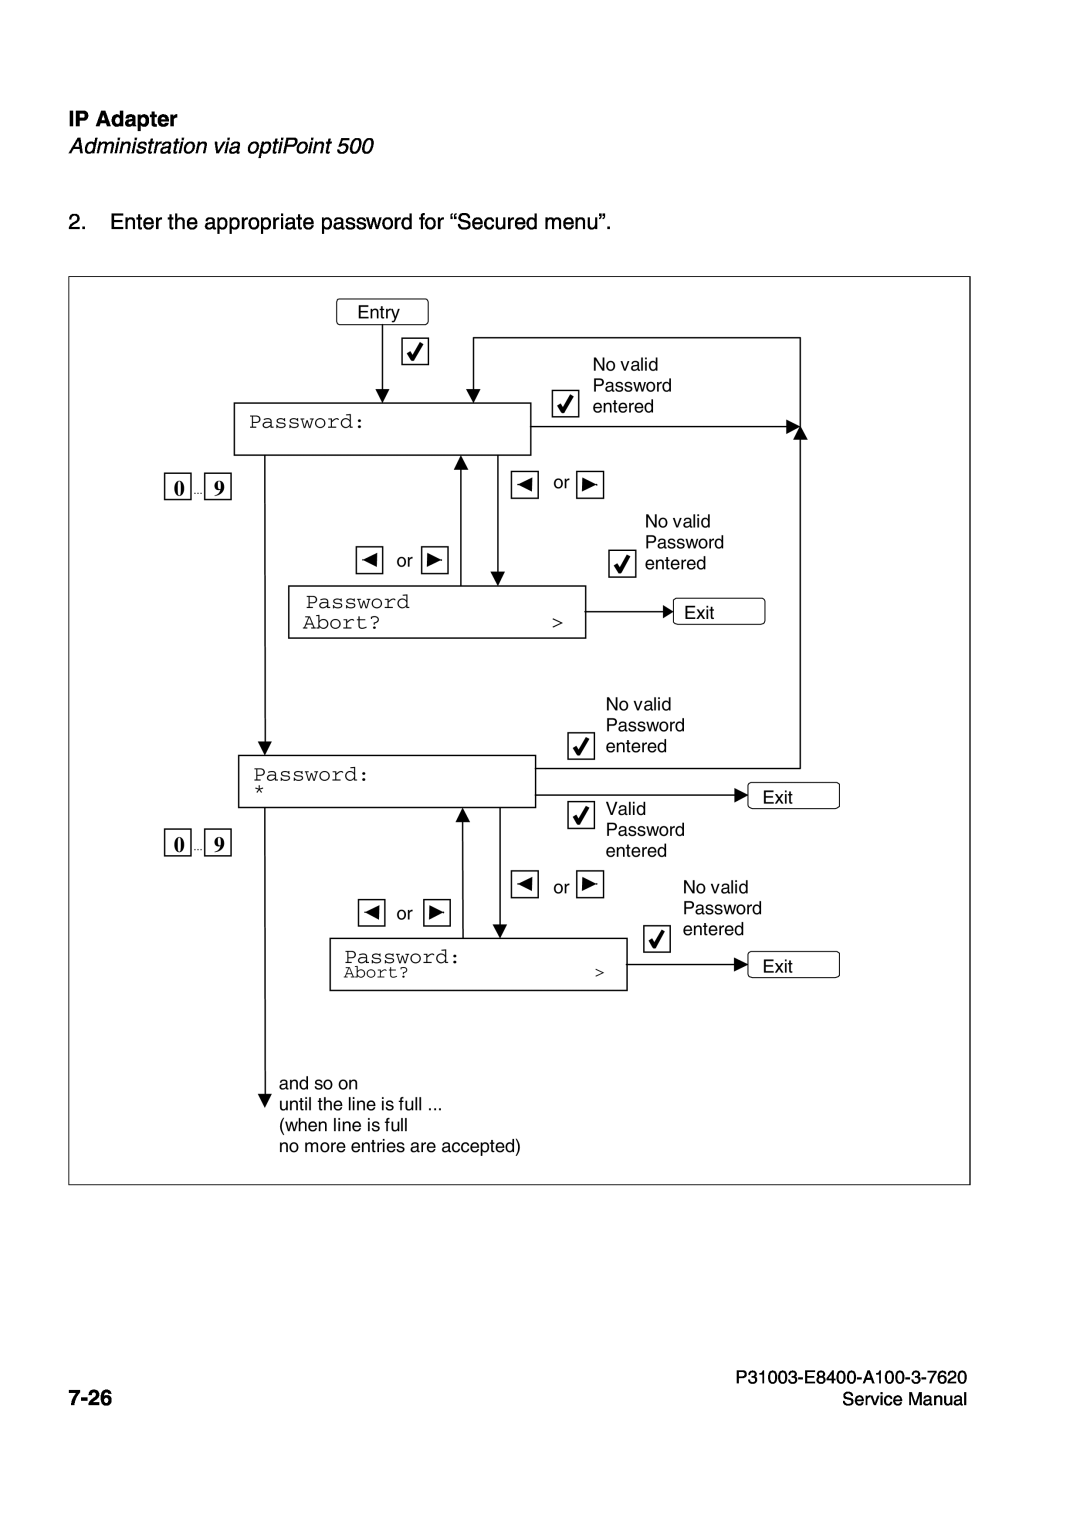 Siemens 500 service manual IP Adapter, Password Abort?, 7-26 